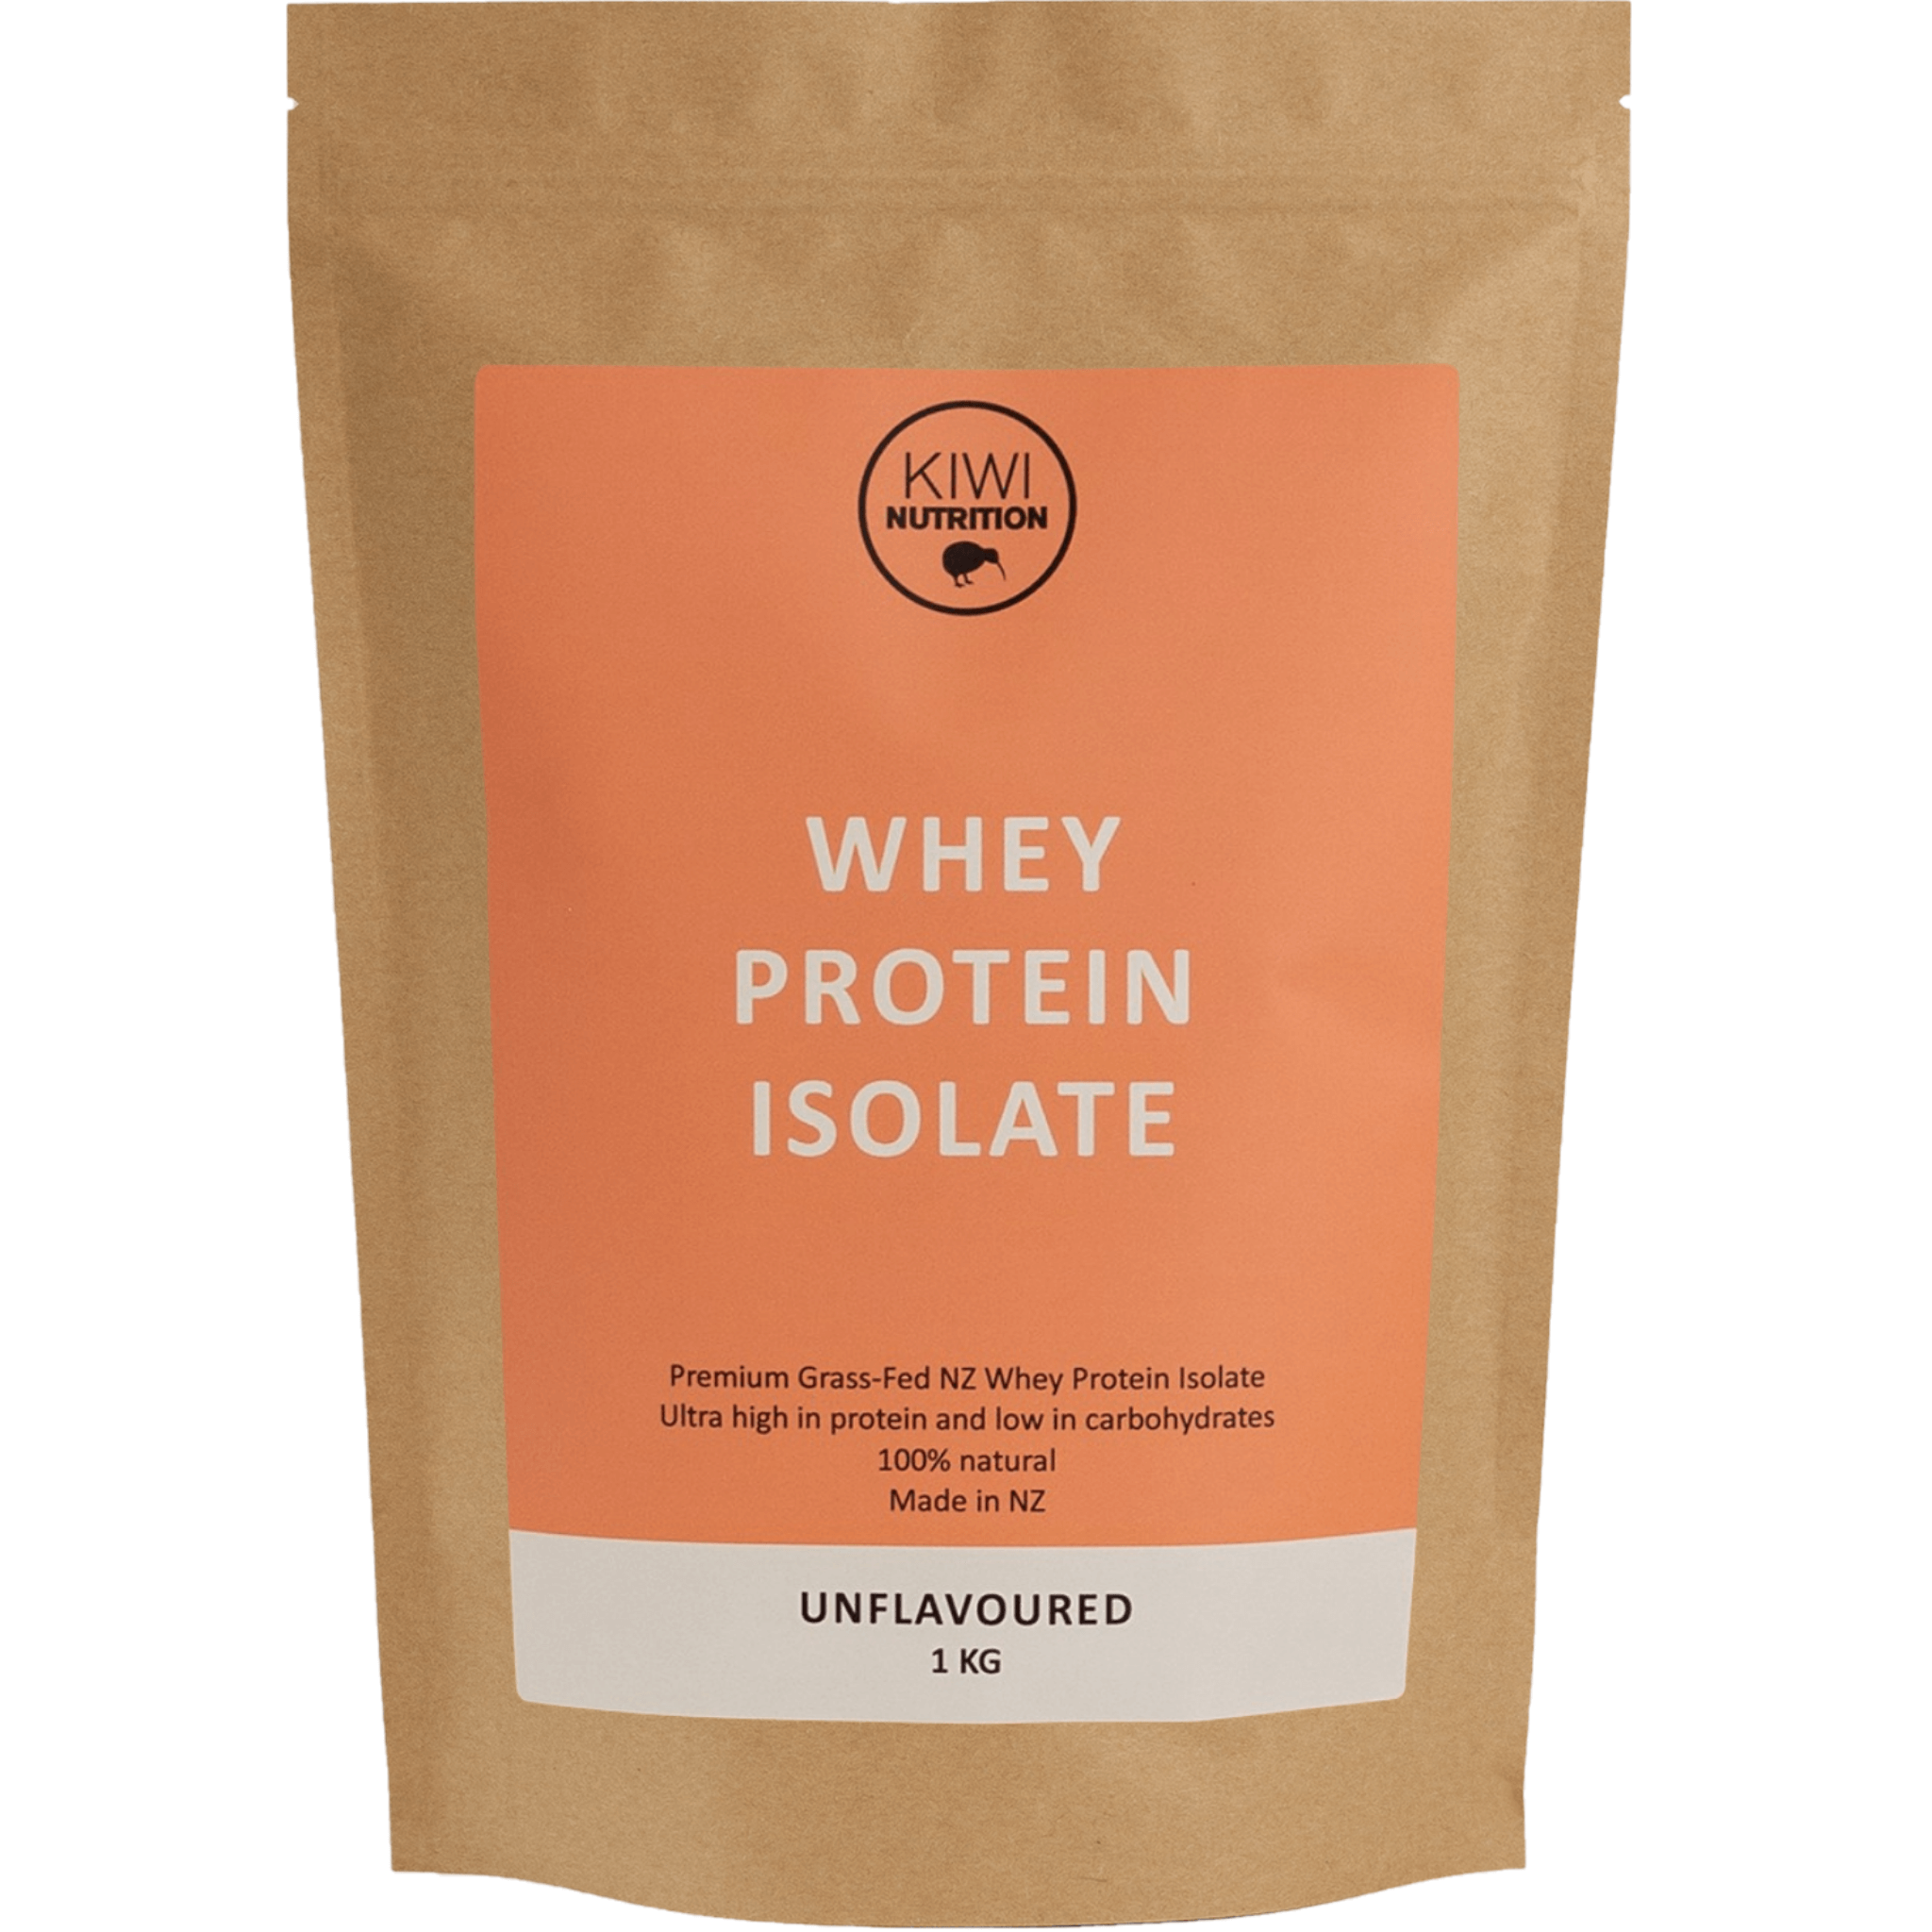 Protein Powder NZ, NZ Whey Protein Isolate, Kiwi Nutrition Unflavoured Whey Protein Isolate